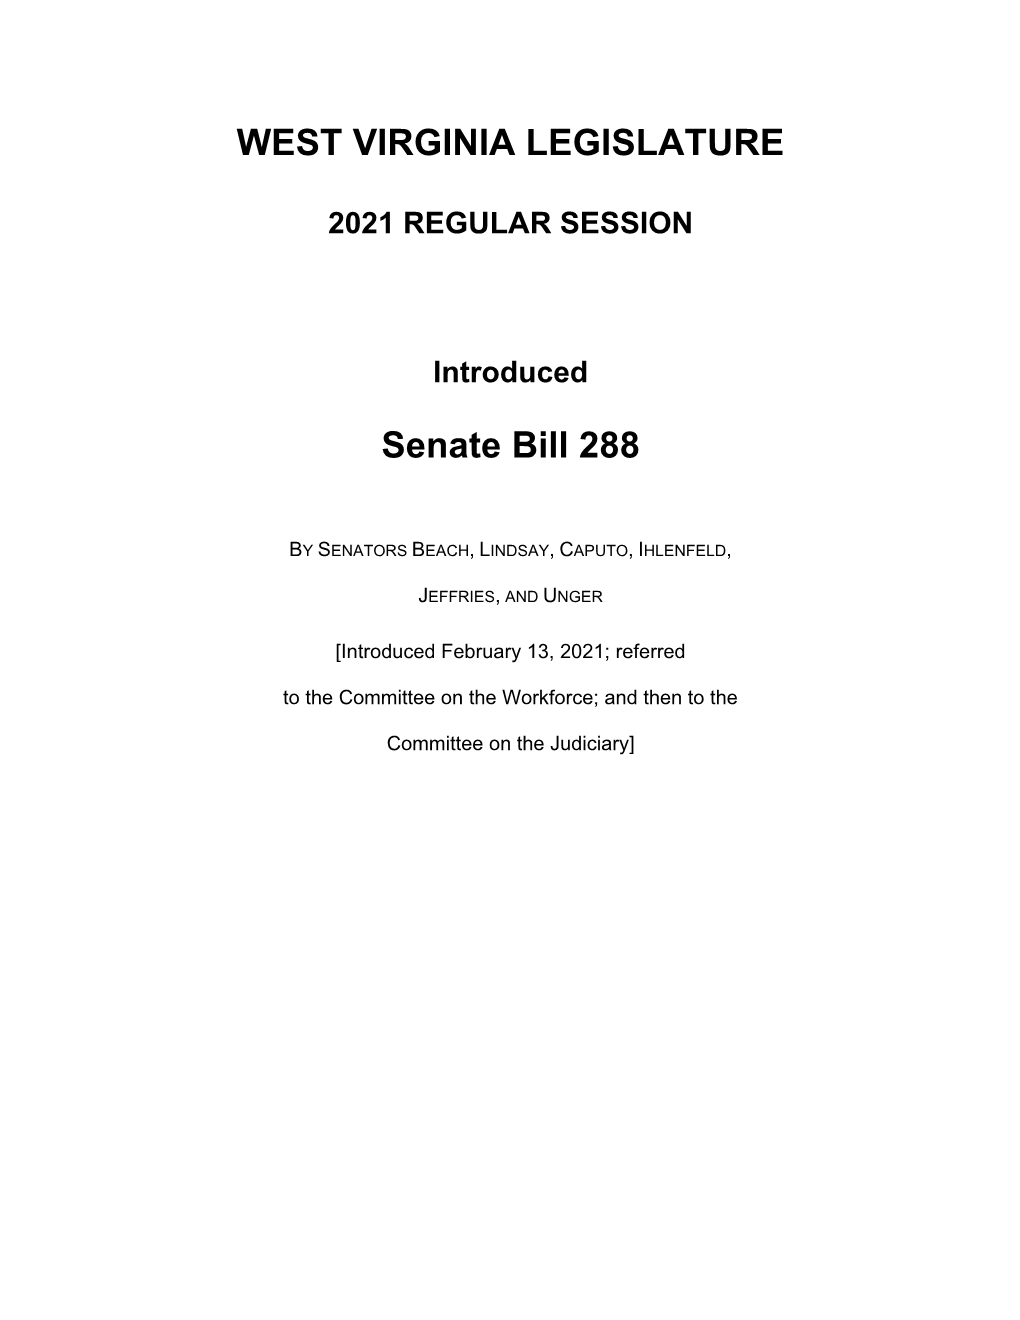 WEST VIRGINIA LEGISLATURE Senate Bill